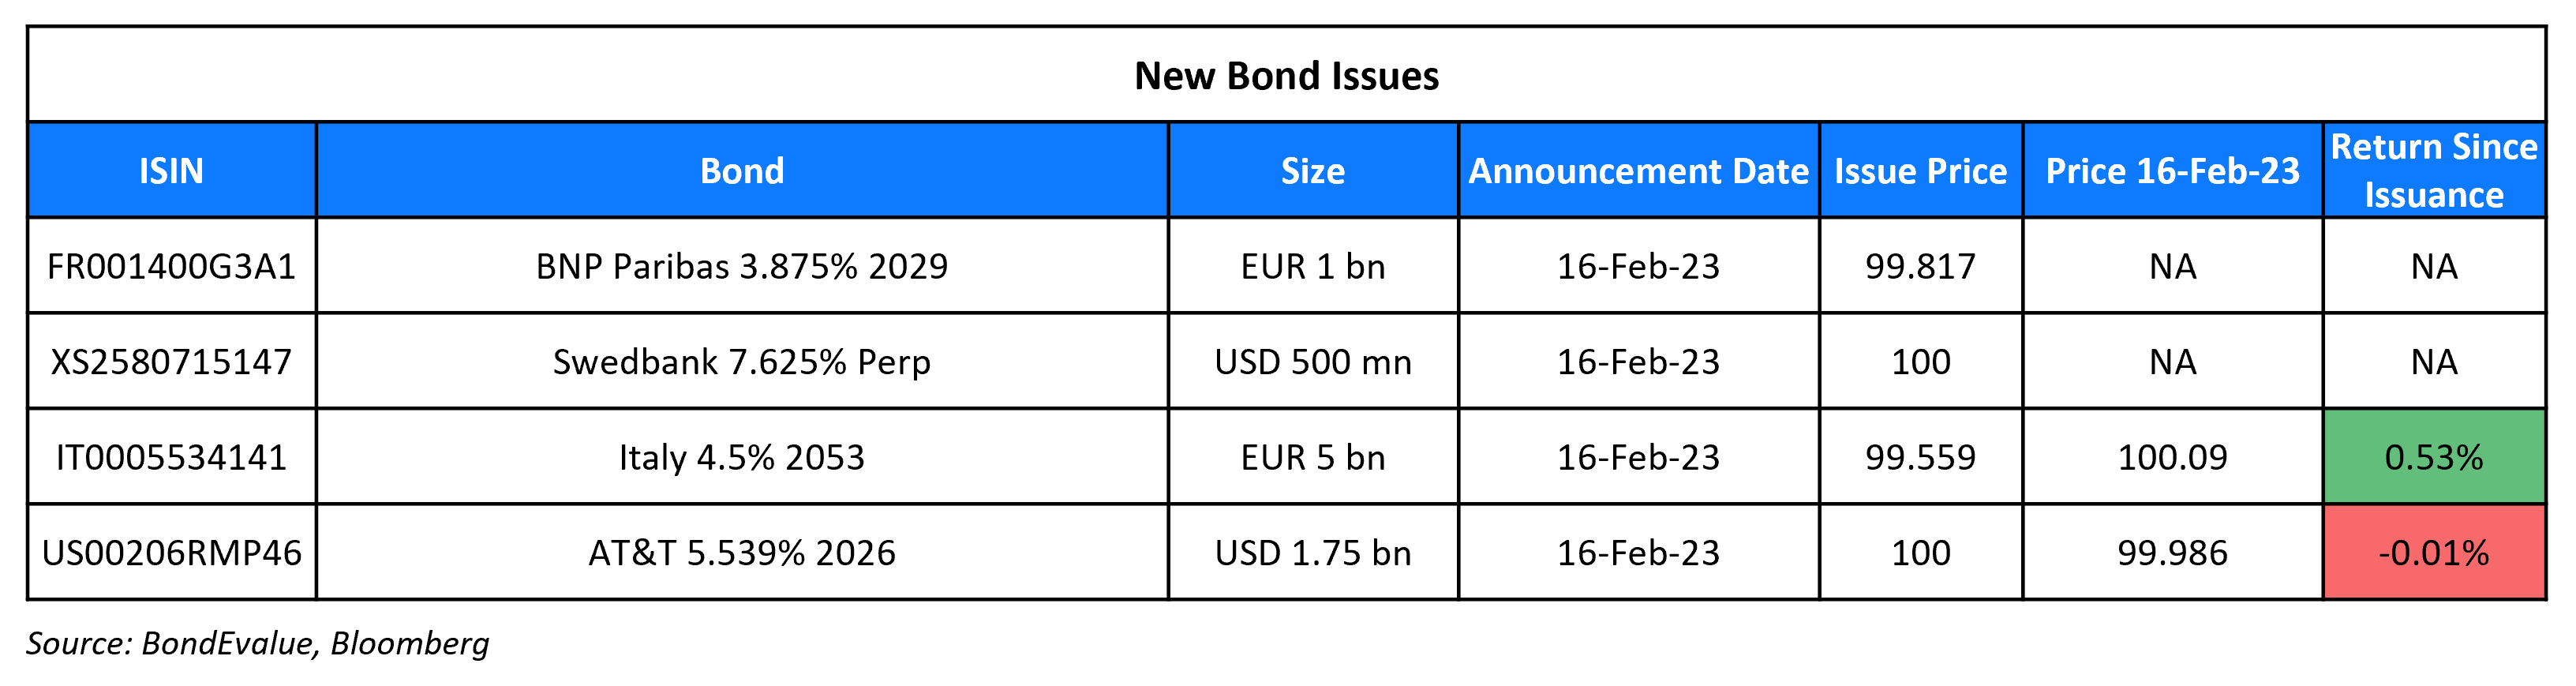 New Bond Issues 17 Feb 23